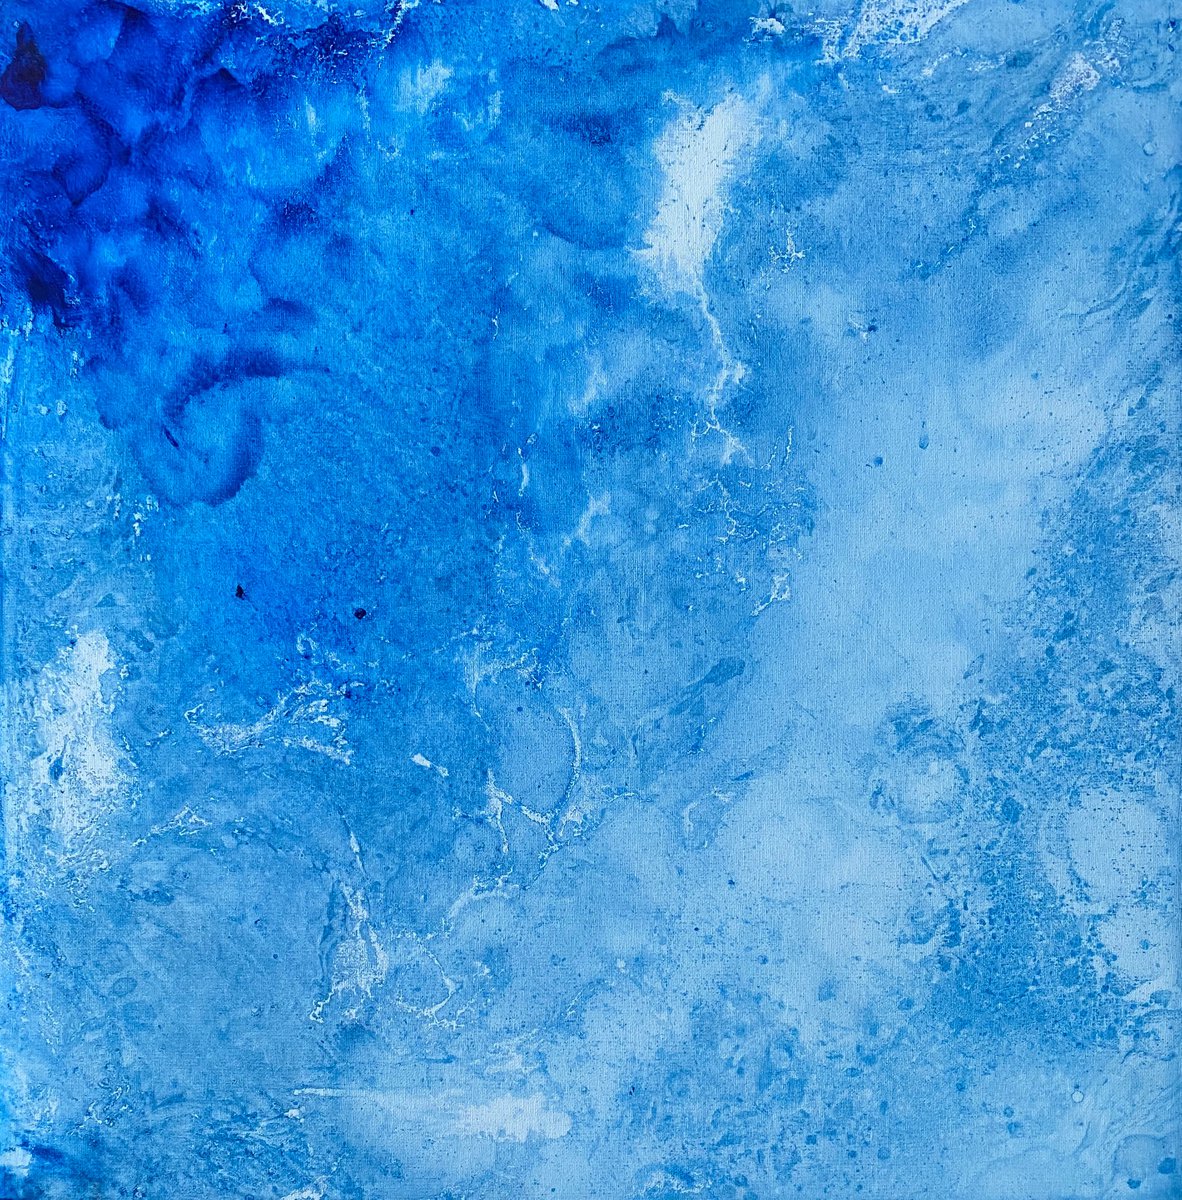 Blue abstract painting 2205202007 by Natalya Burgos